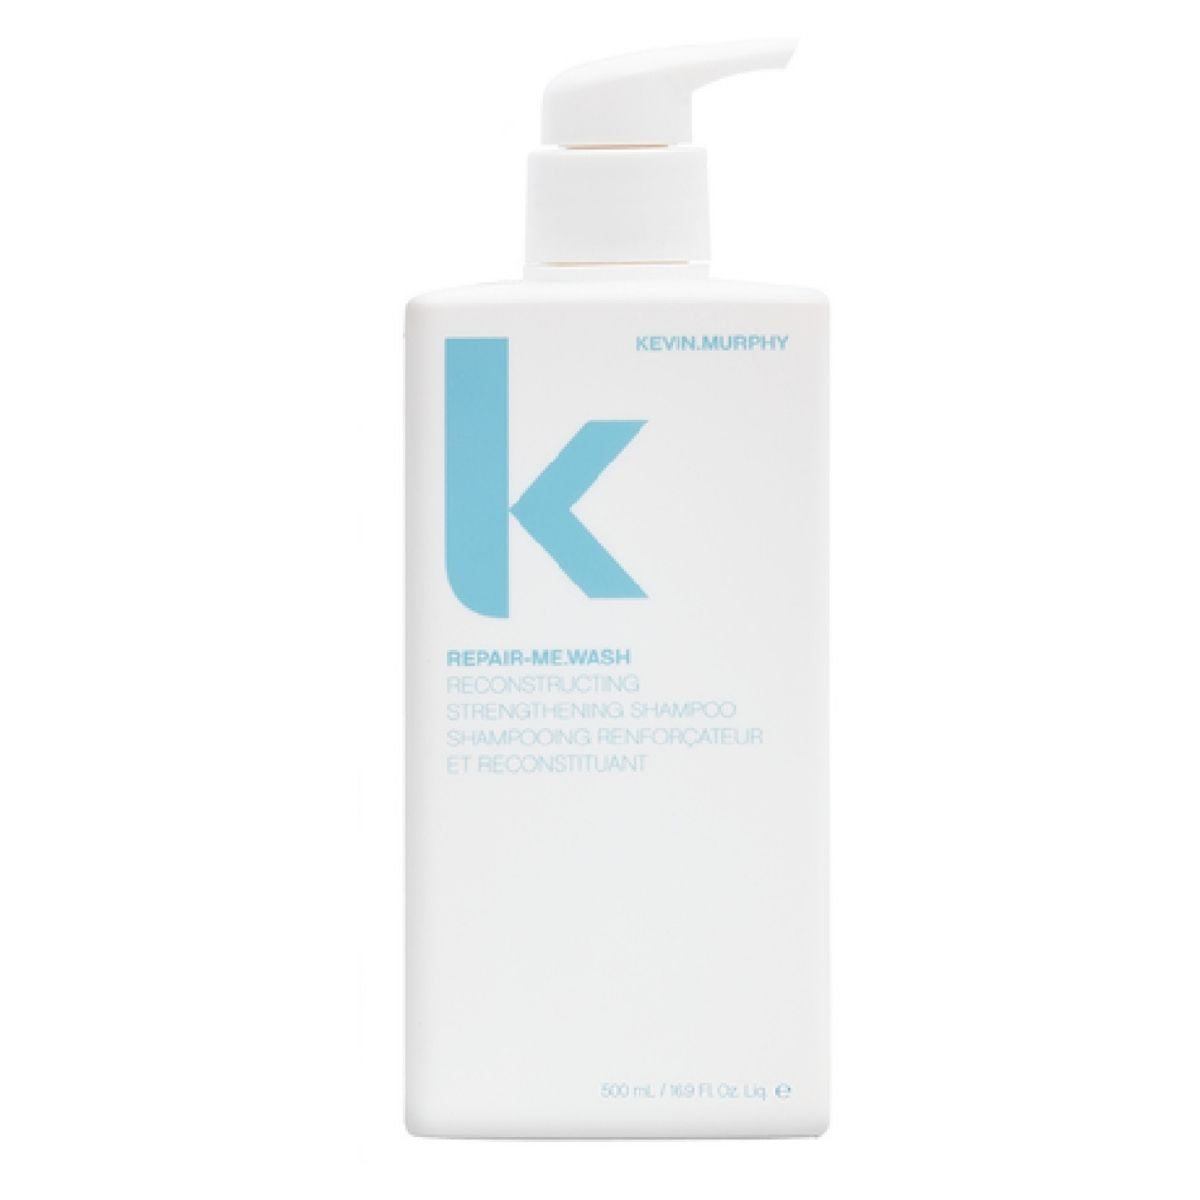 Kevin Murphy Repair Me Wash Shampoo Limited Edition 500ml